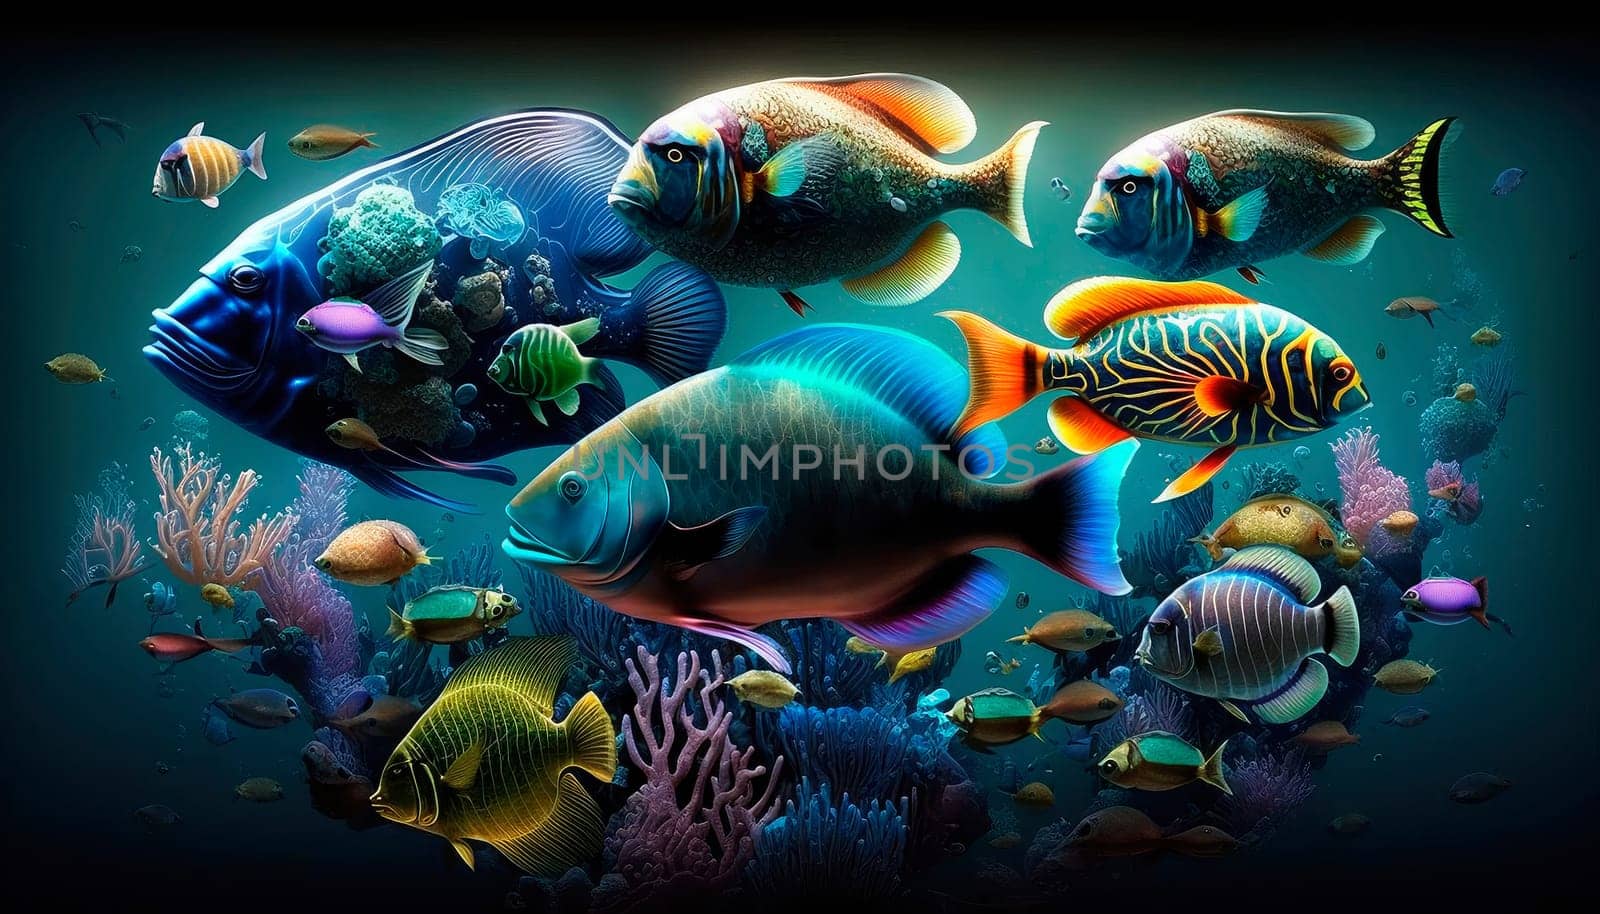 underwater world of fish and corals. by yanadjana